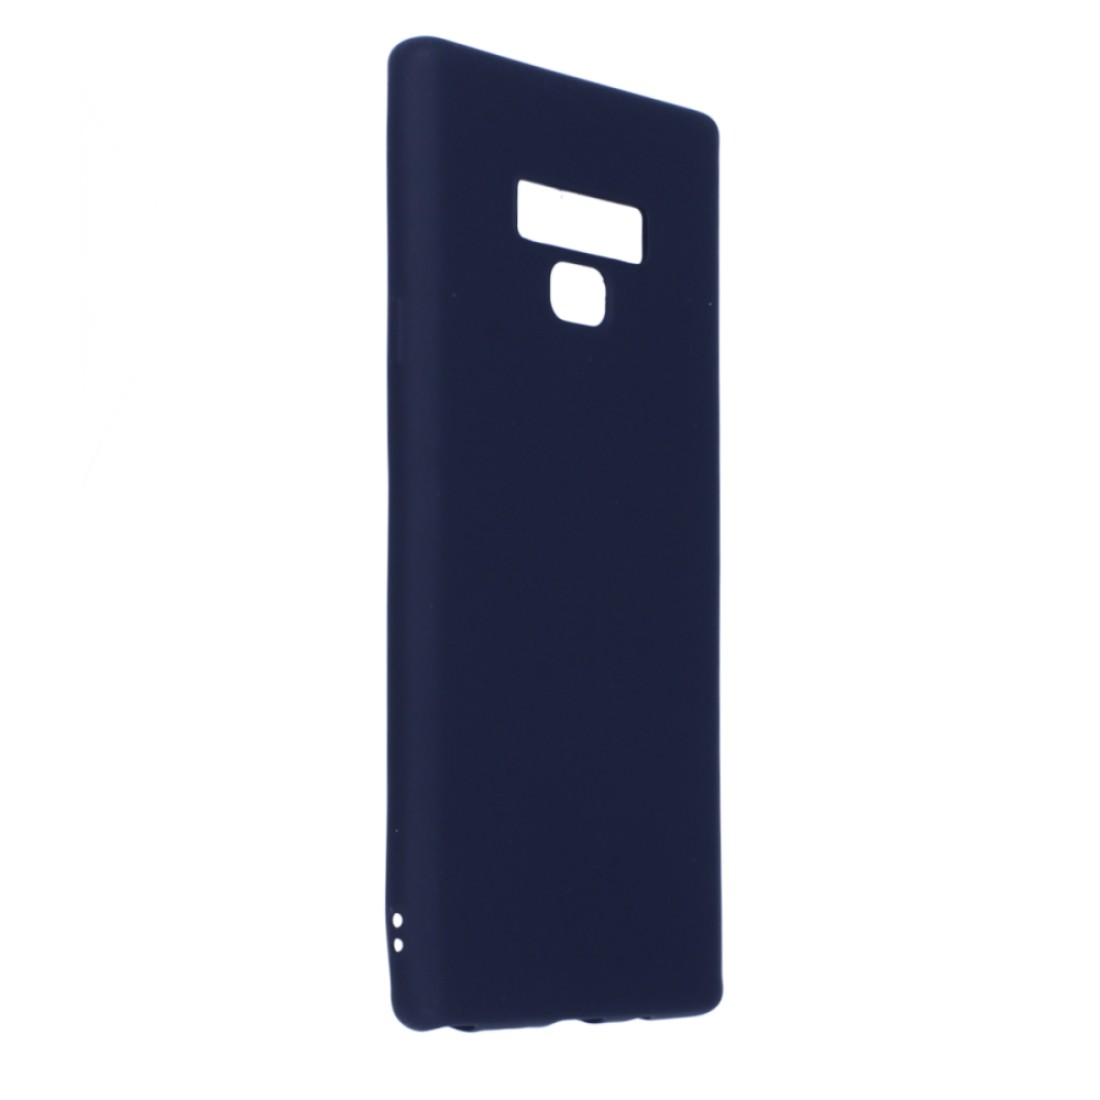 Samsung Galaxy Note 9 Kılıf Premium Rubber Silikon - Lacivert